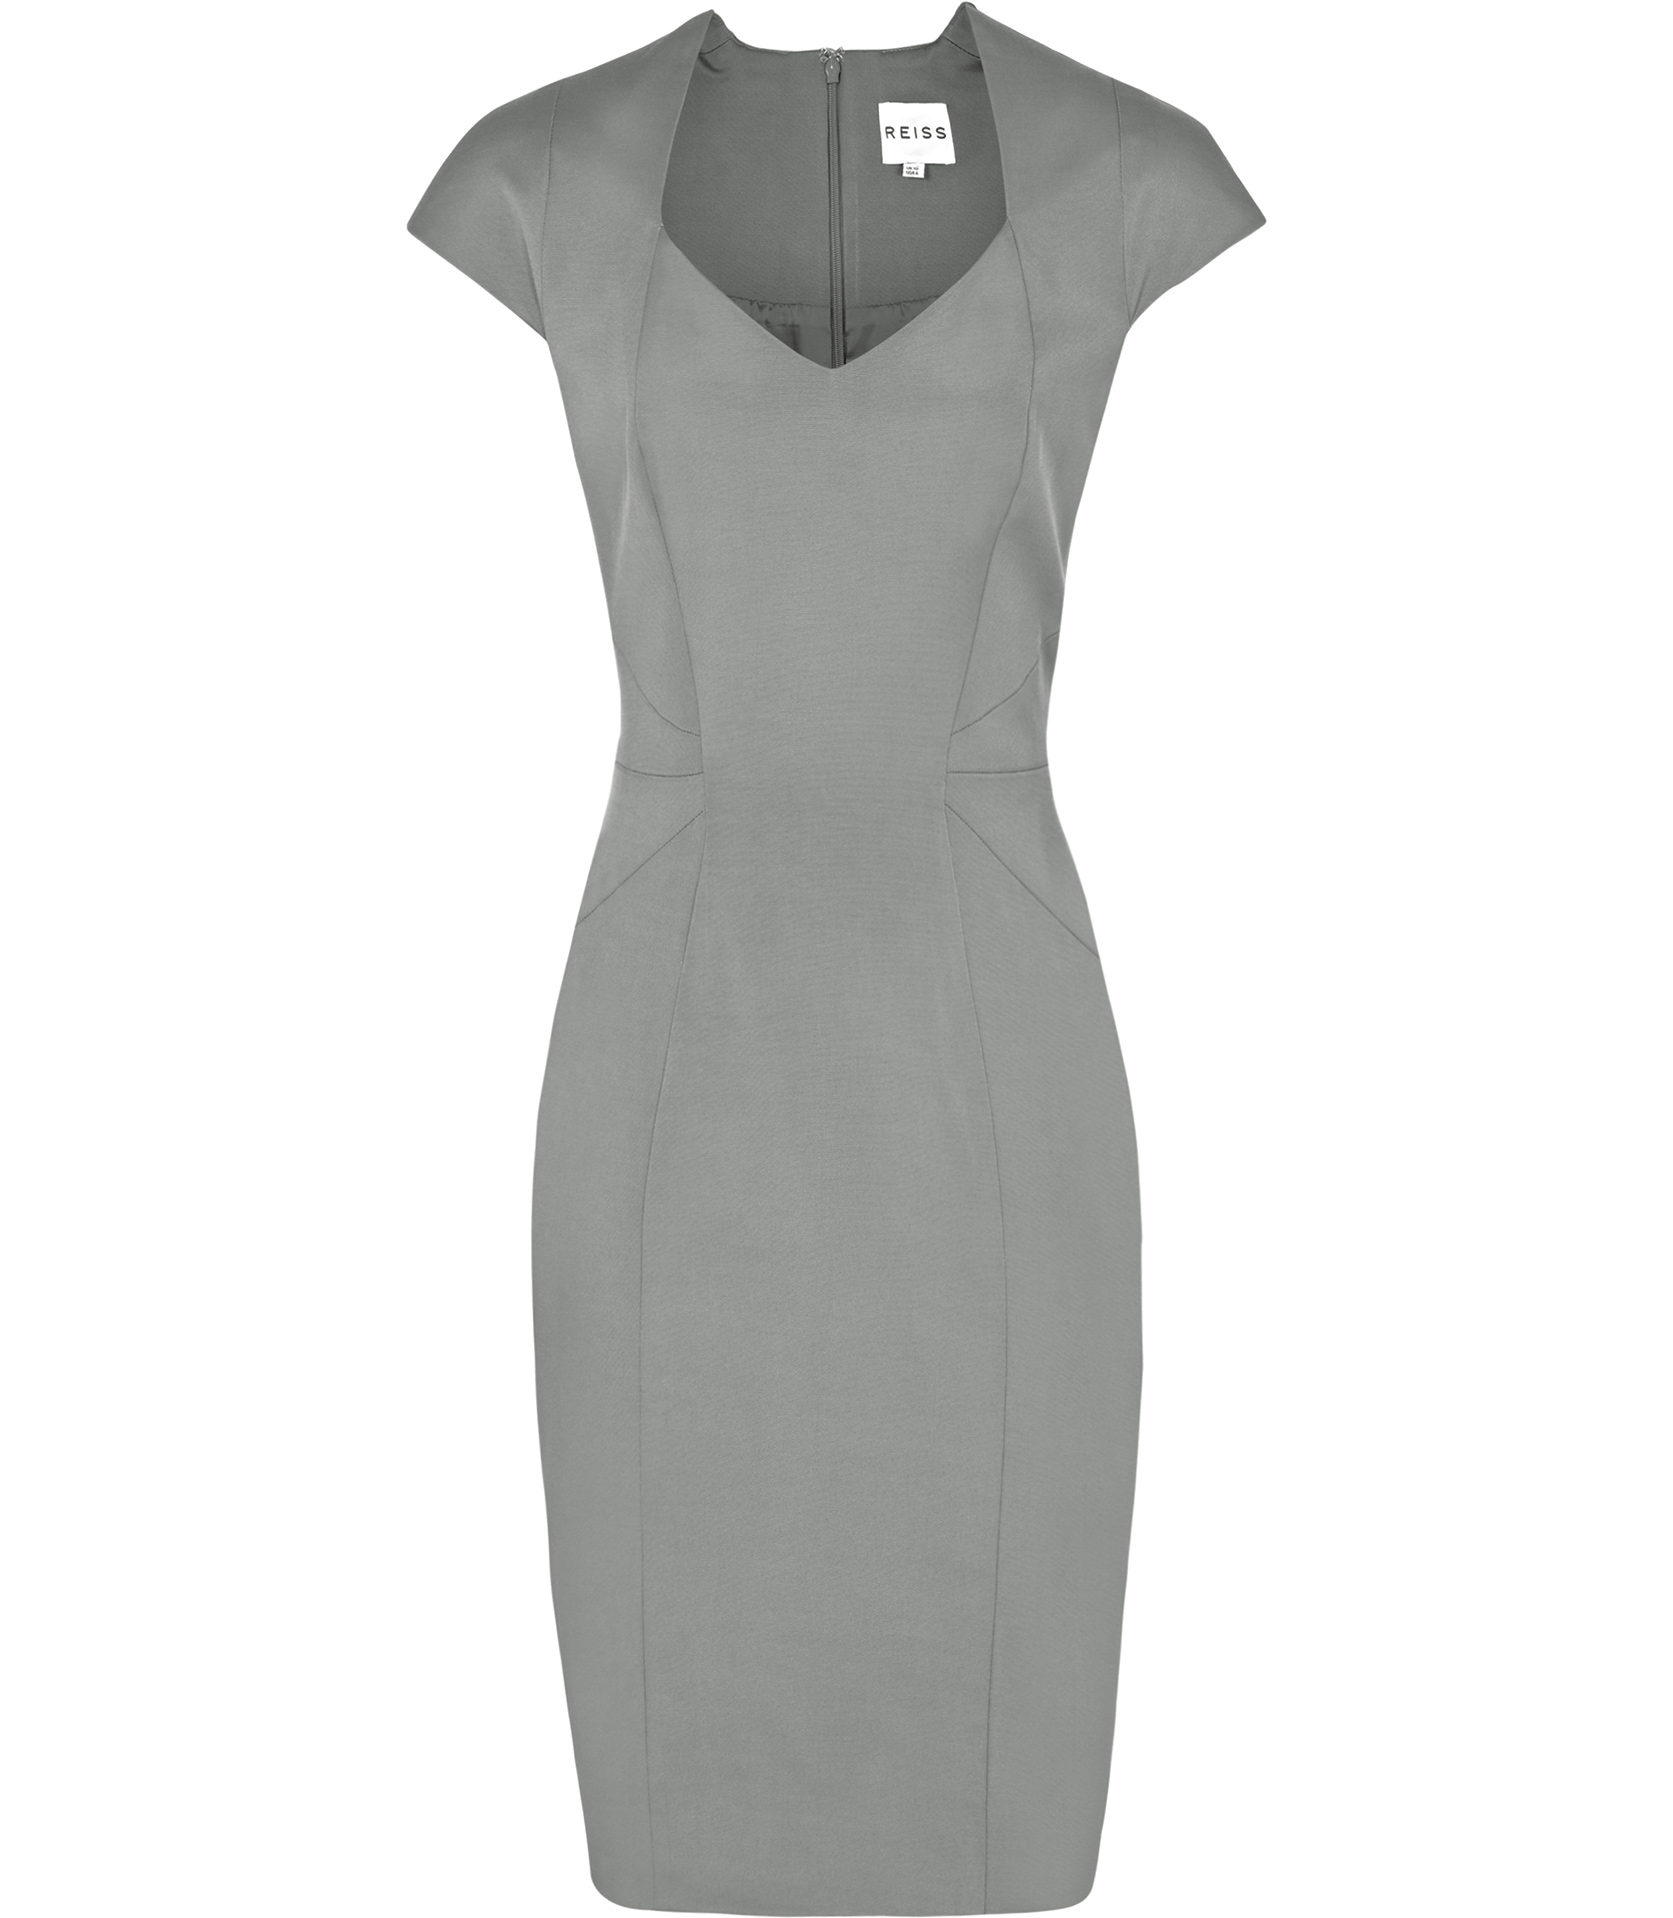 Lyst - Reiss Clarinet Dart Detail Dress Olive in Gray